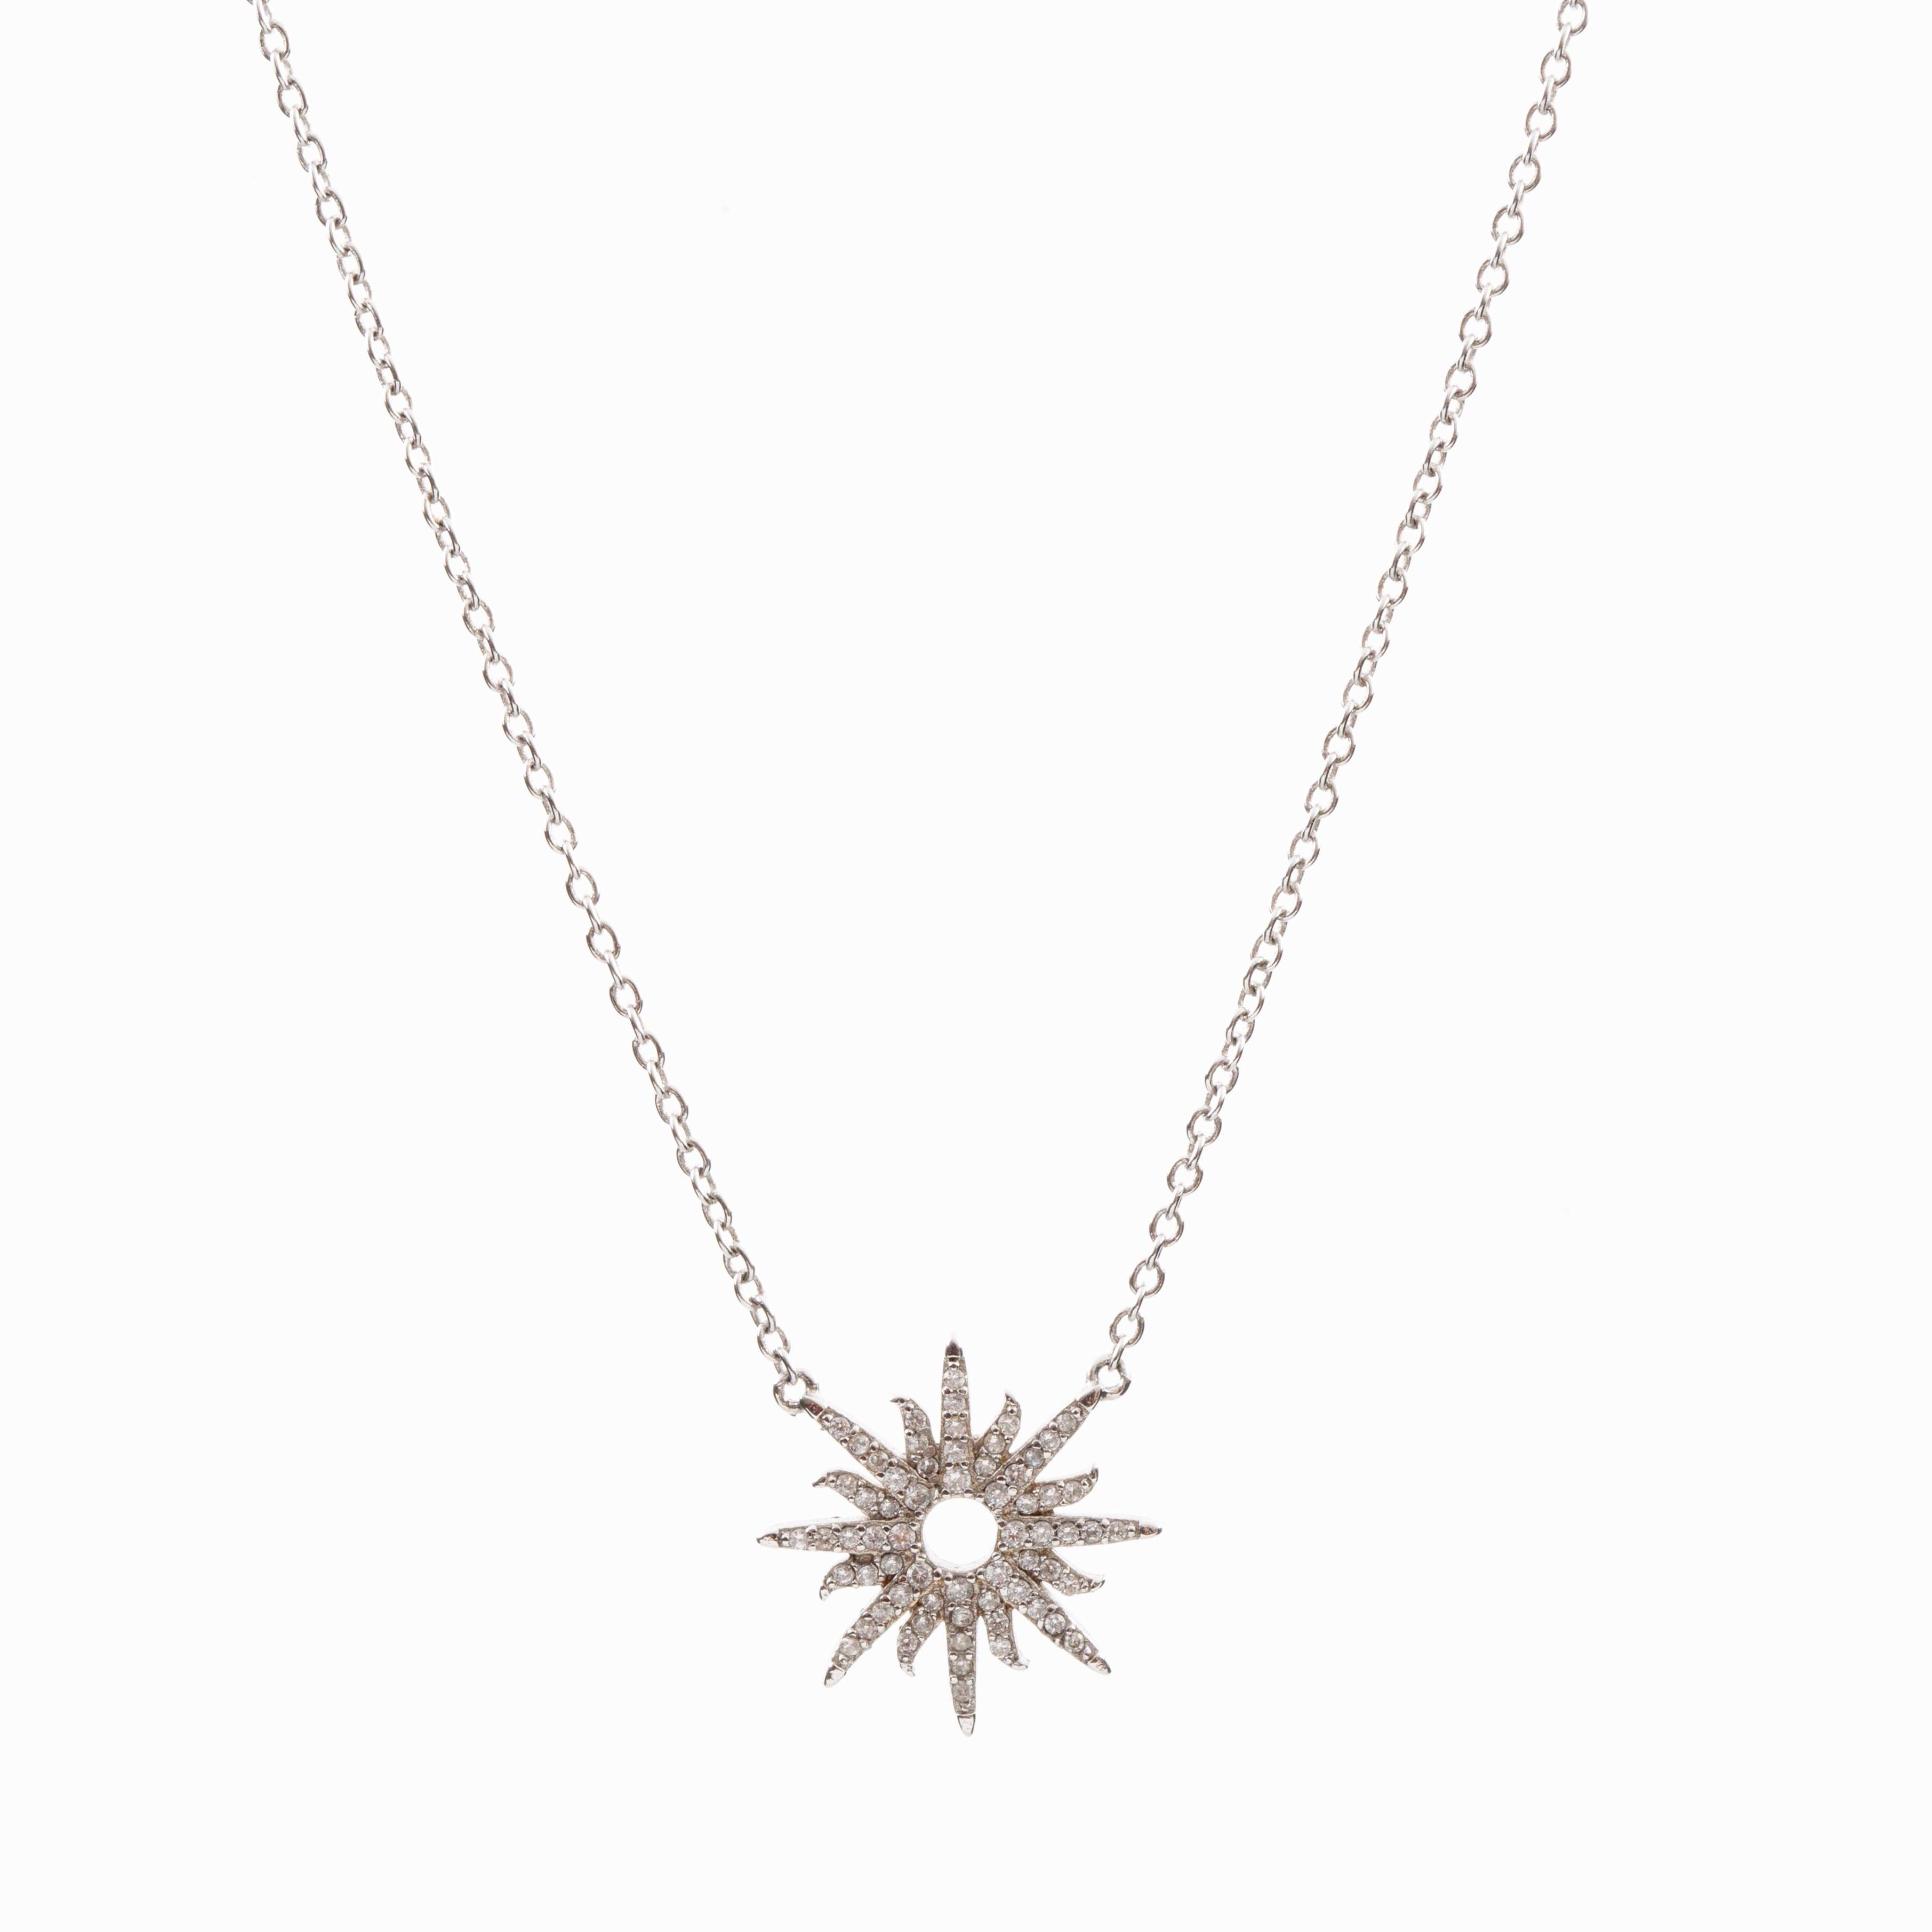 Sterling silver Sunburst necklace